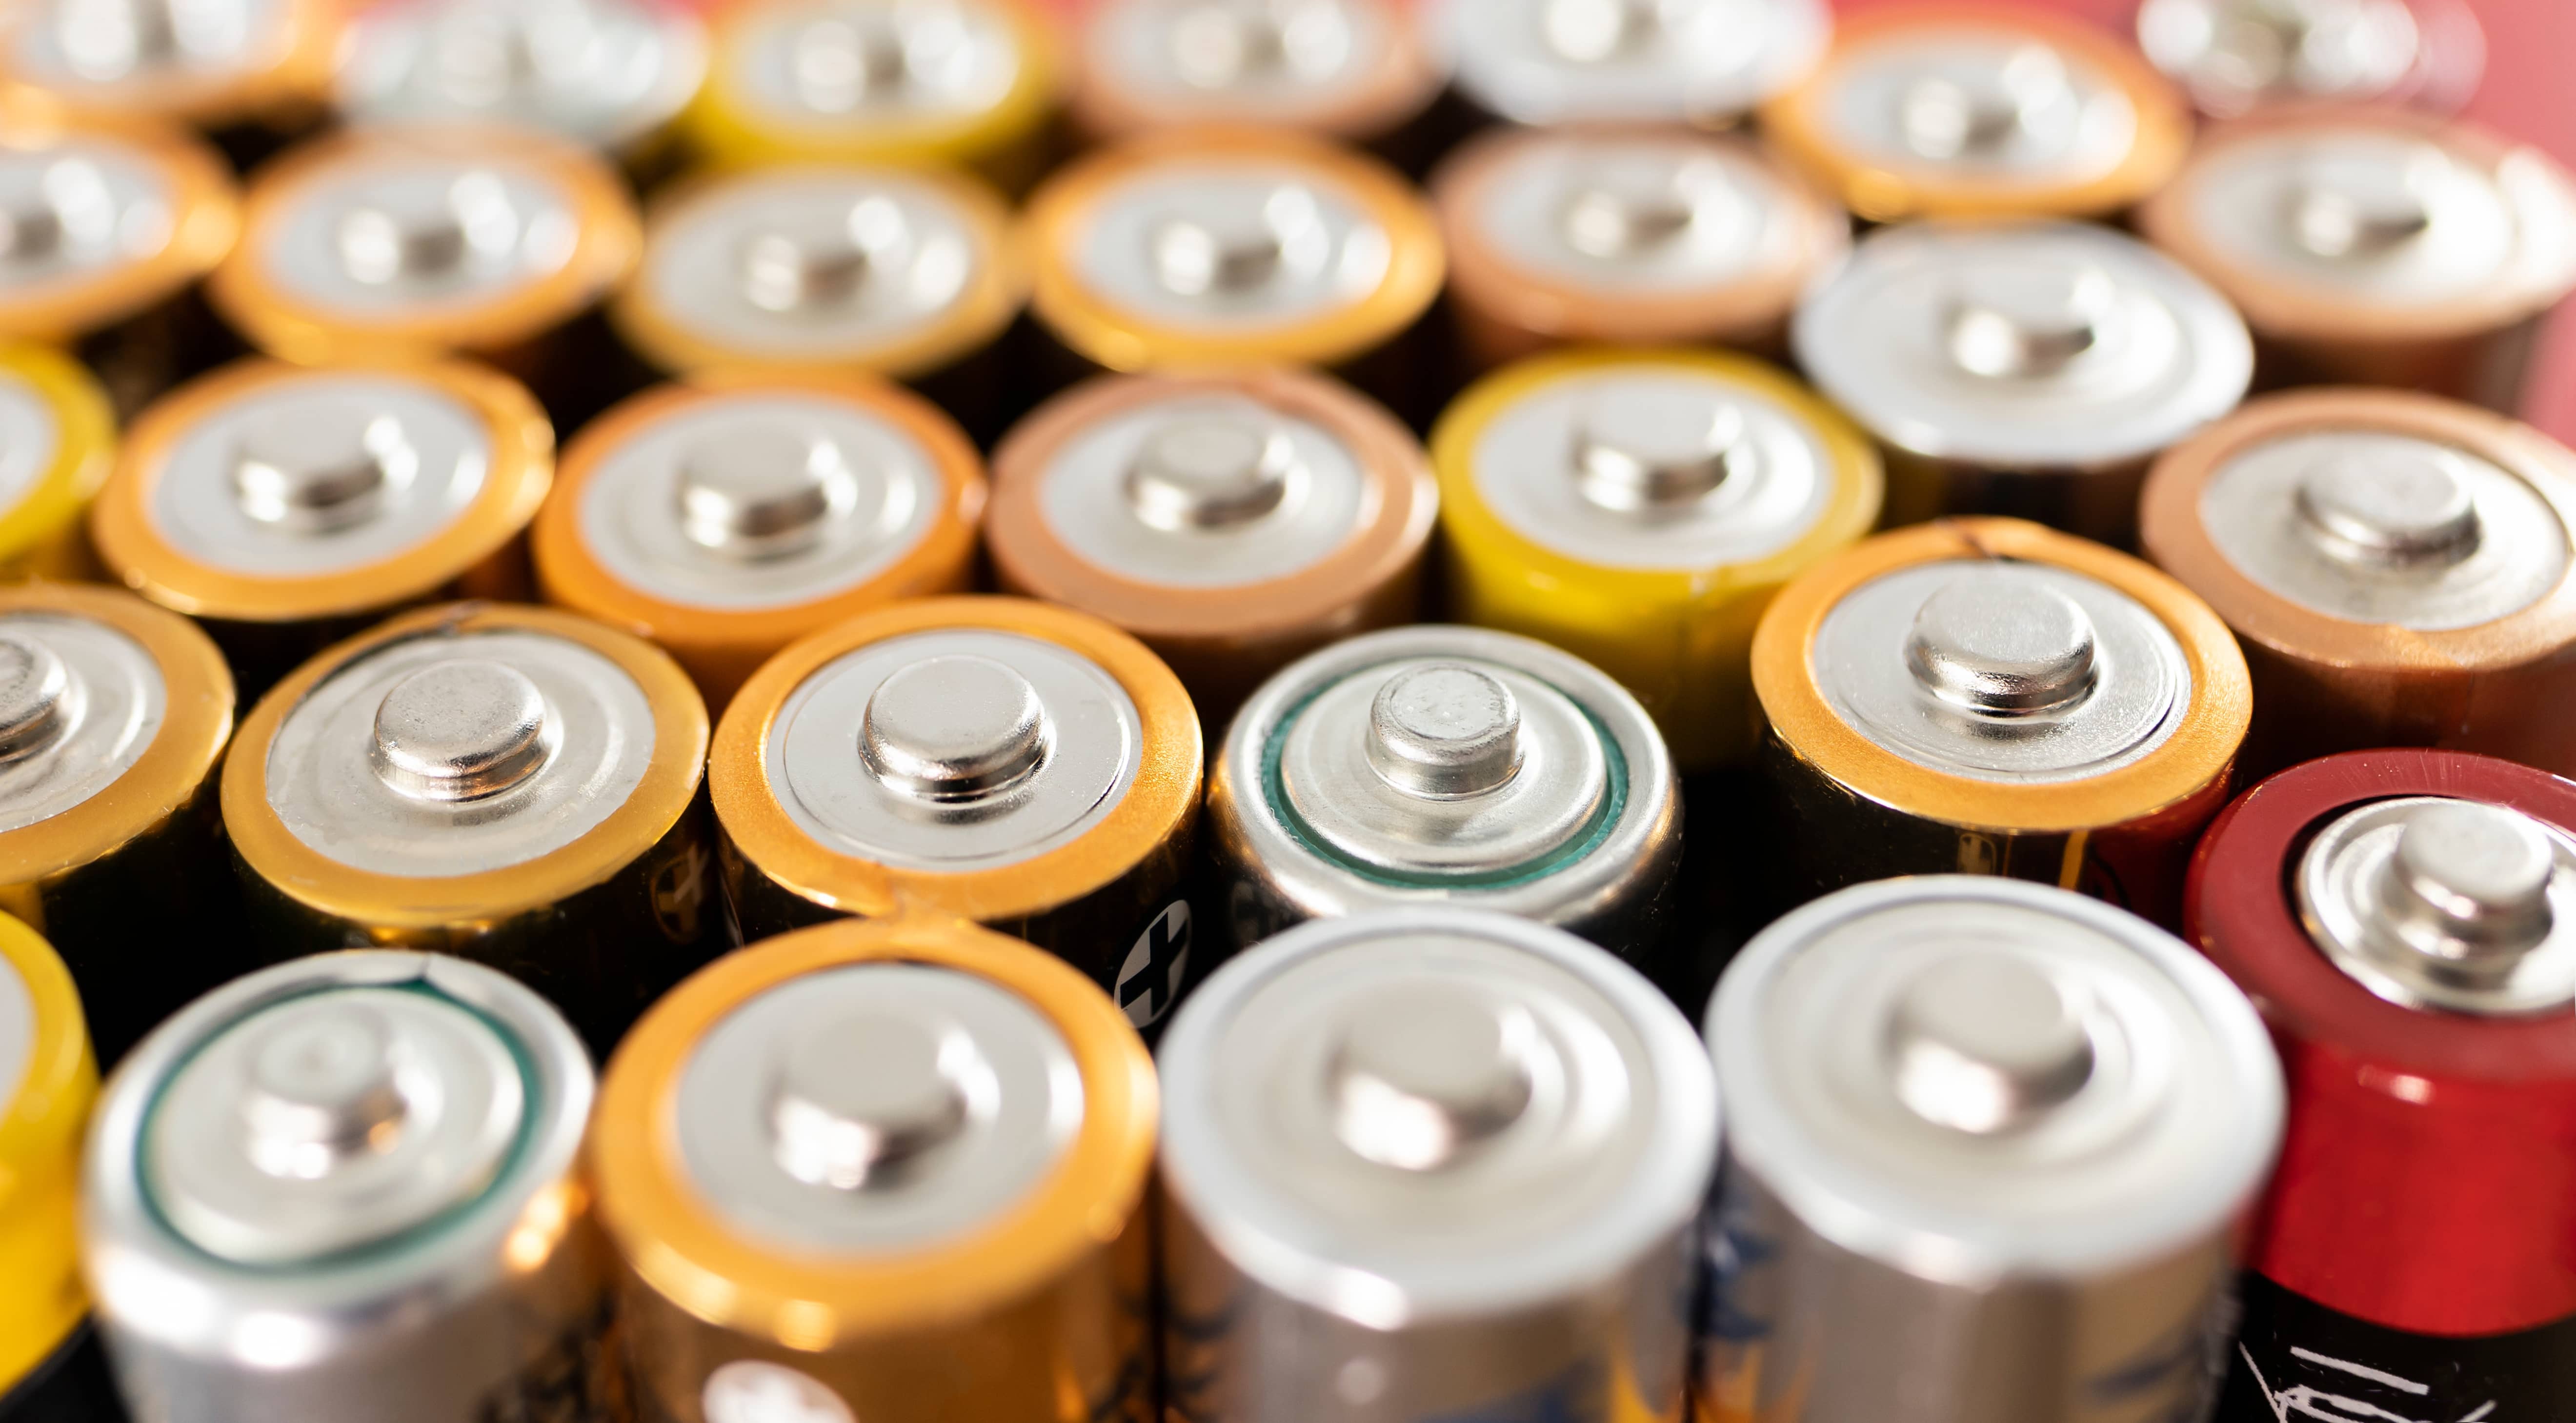 alkaline-used-batteries-aa-type-battery-recycling-2022-11-14-12-26-52-utc